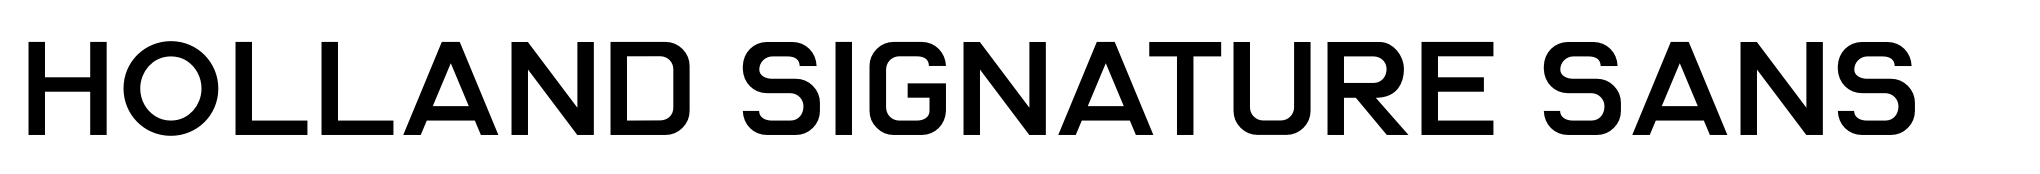 Holland Signature Sans image